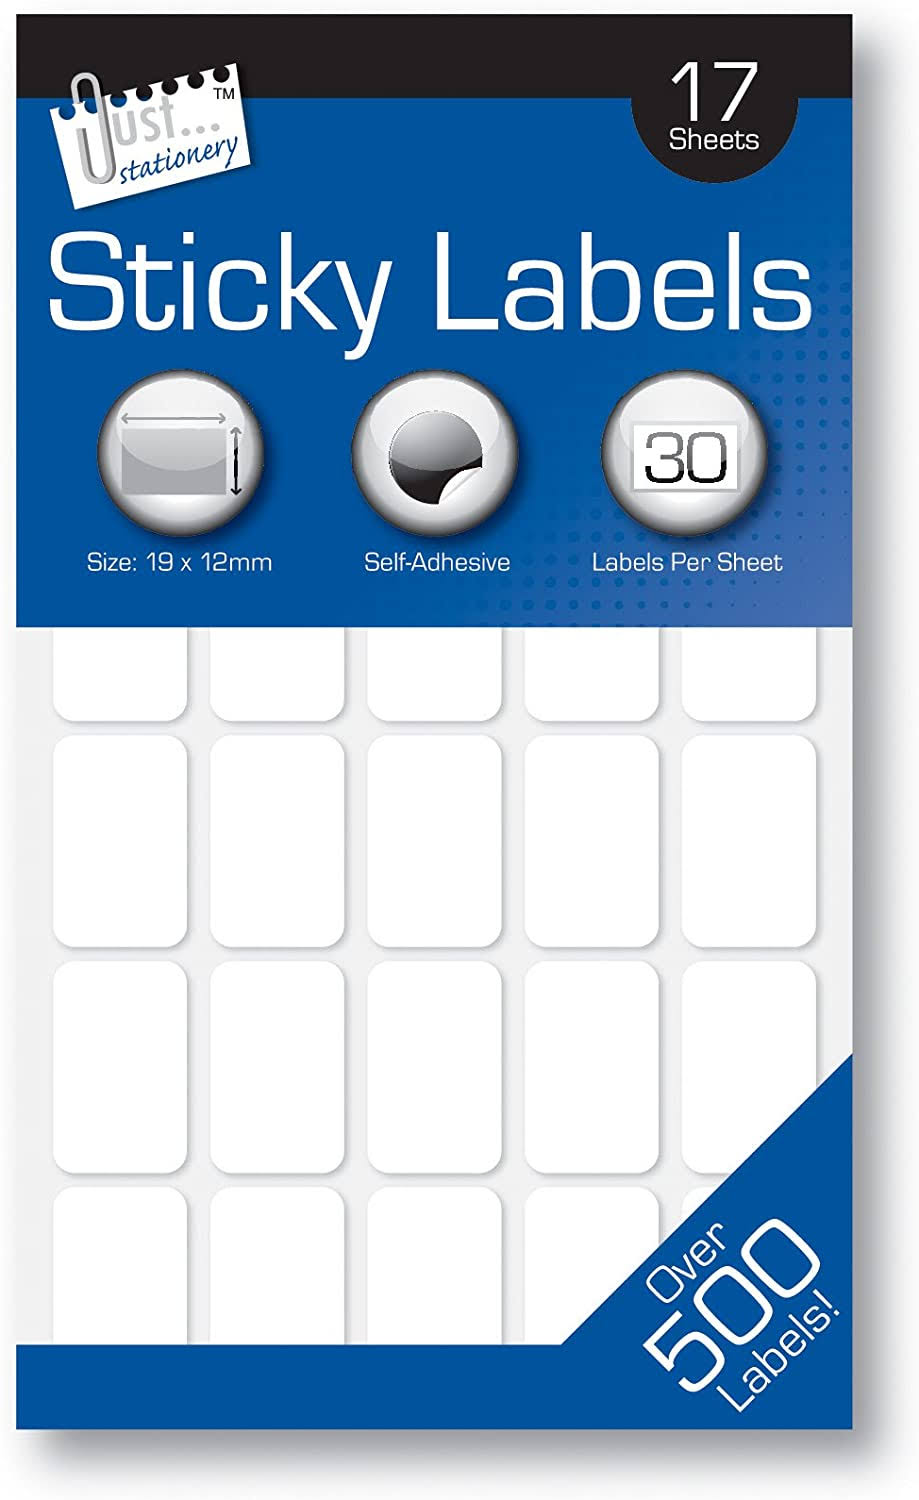 Just Stationery 19x12mm Sticky Label - White